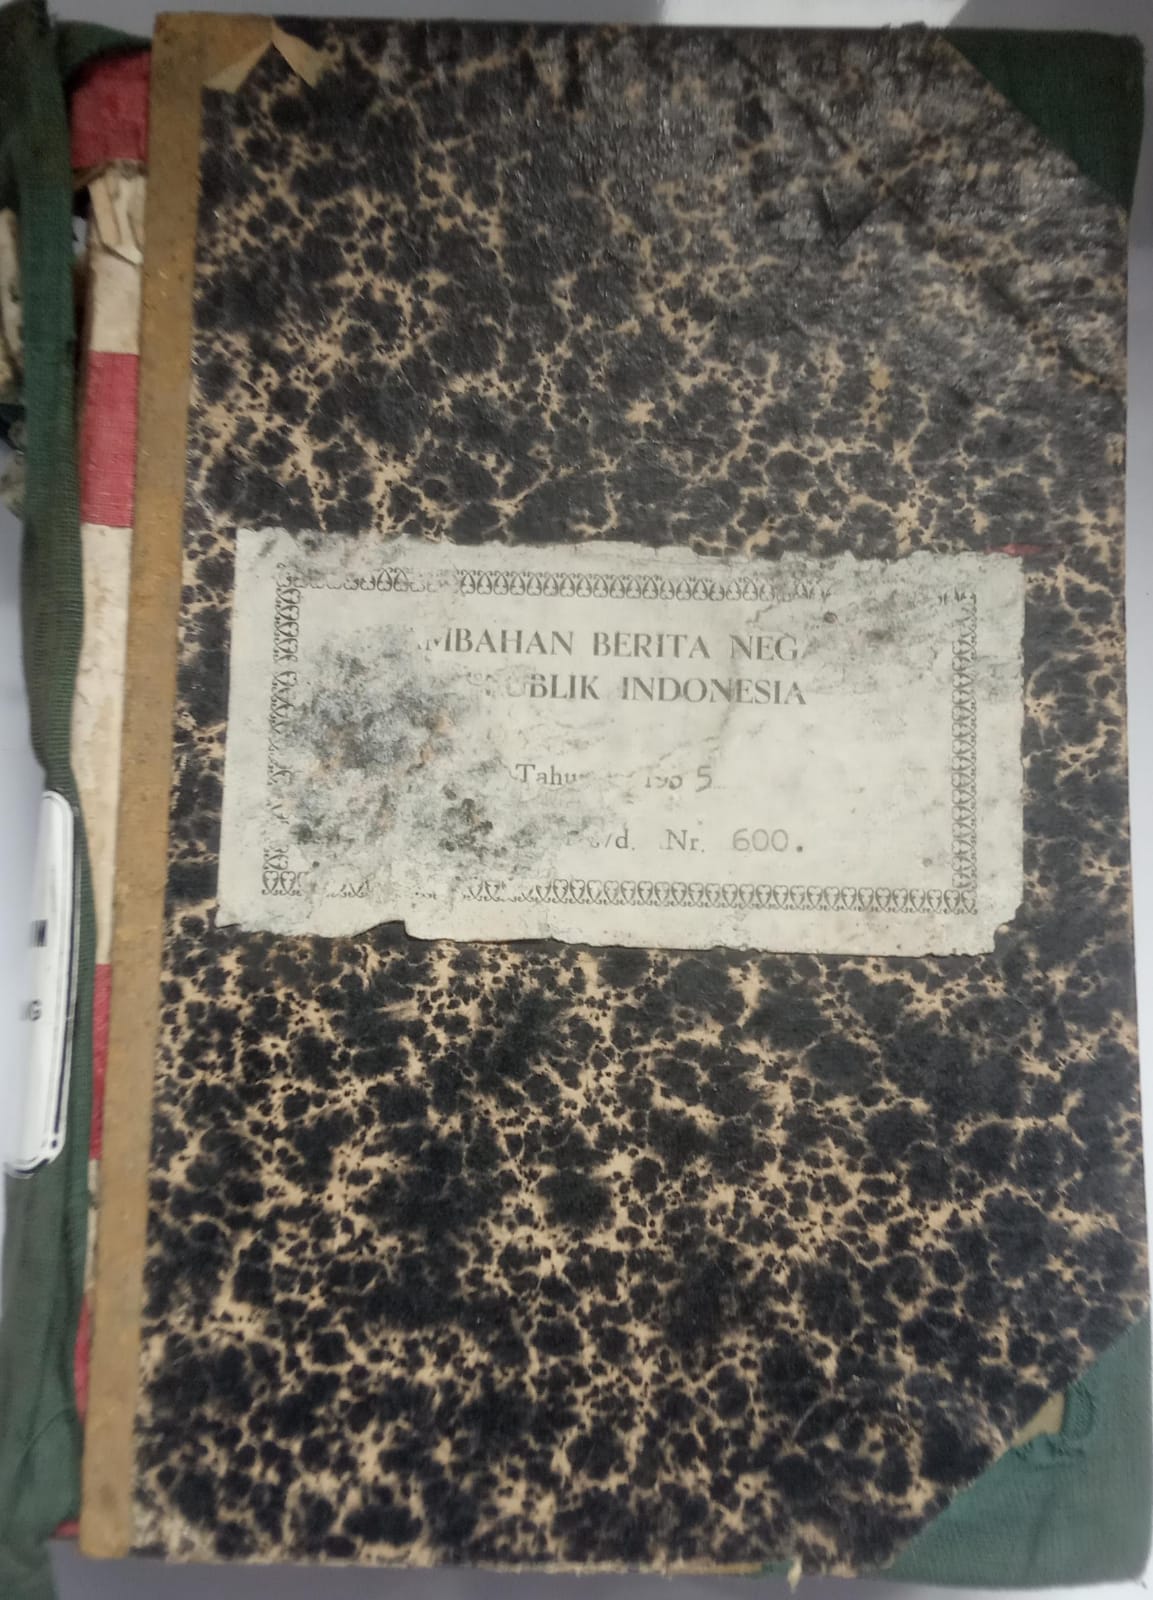 Tambahan Berita Negara Republik Indonesia Tahun : 1955 Nr. 551 s/d Nr. 600